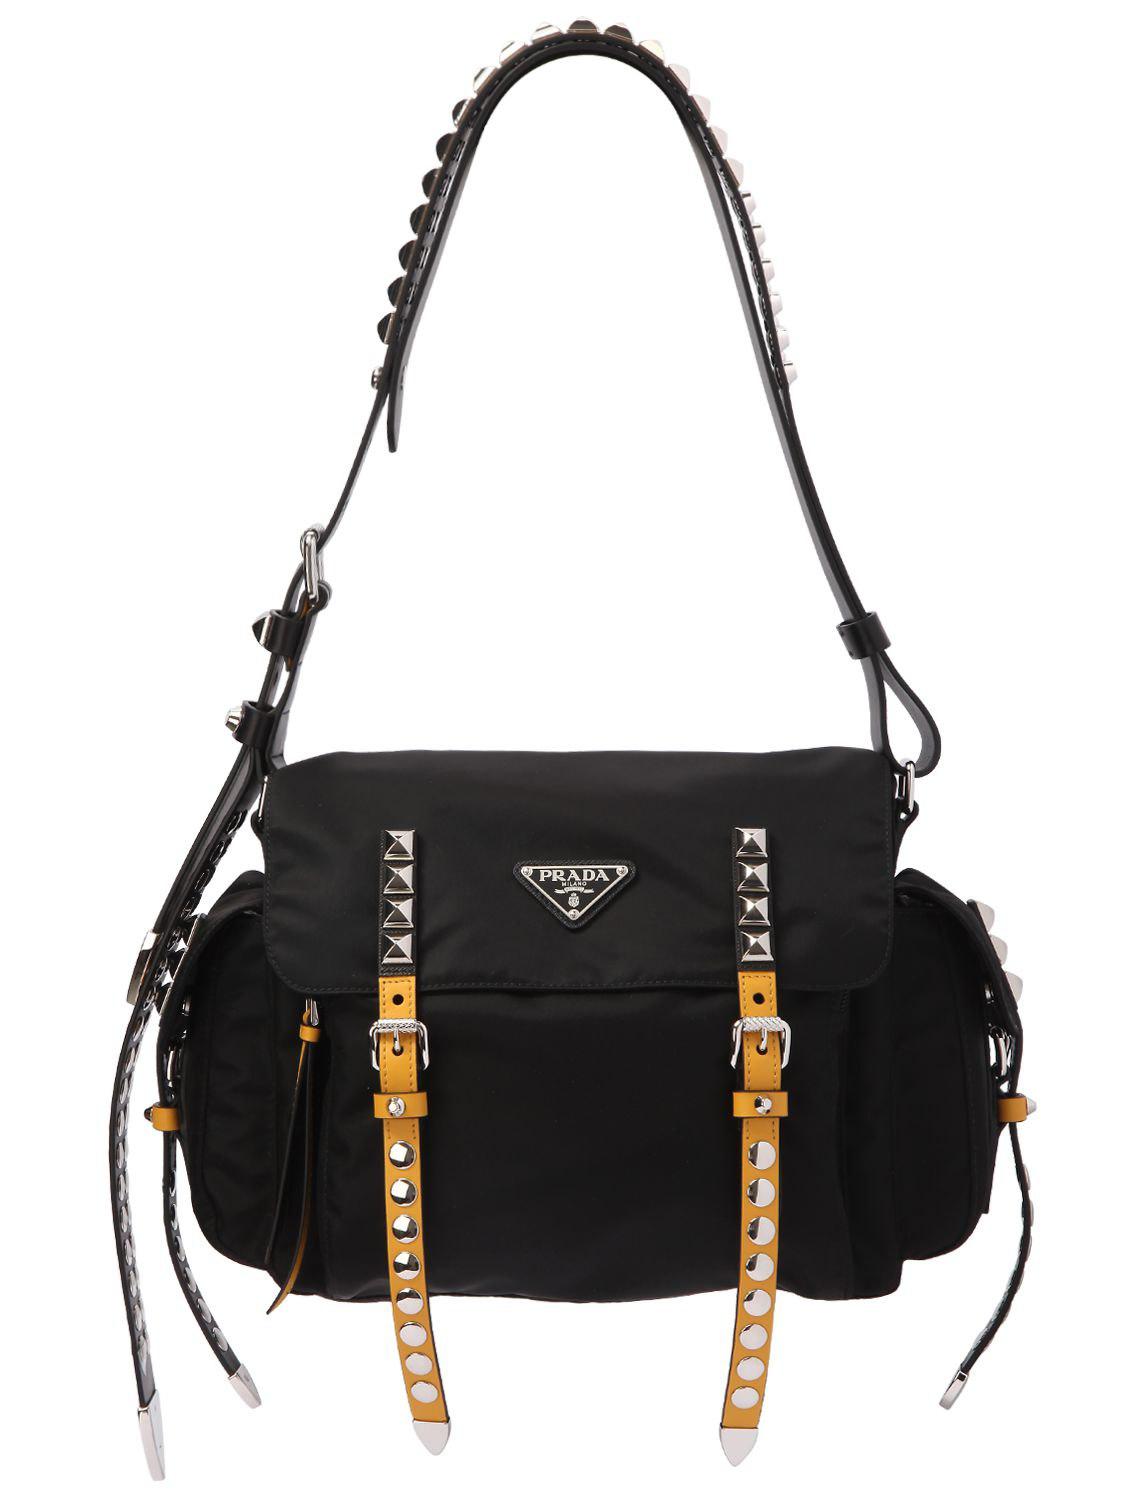 Prada Synthetic Studded Nylon Messenger Bag in Black/Yellow (Black) | Lyst